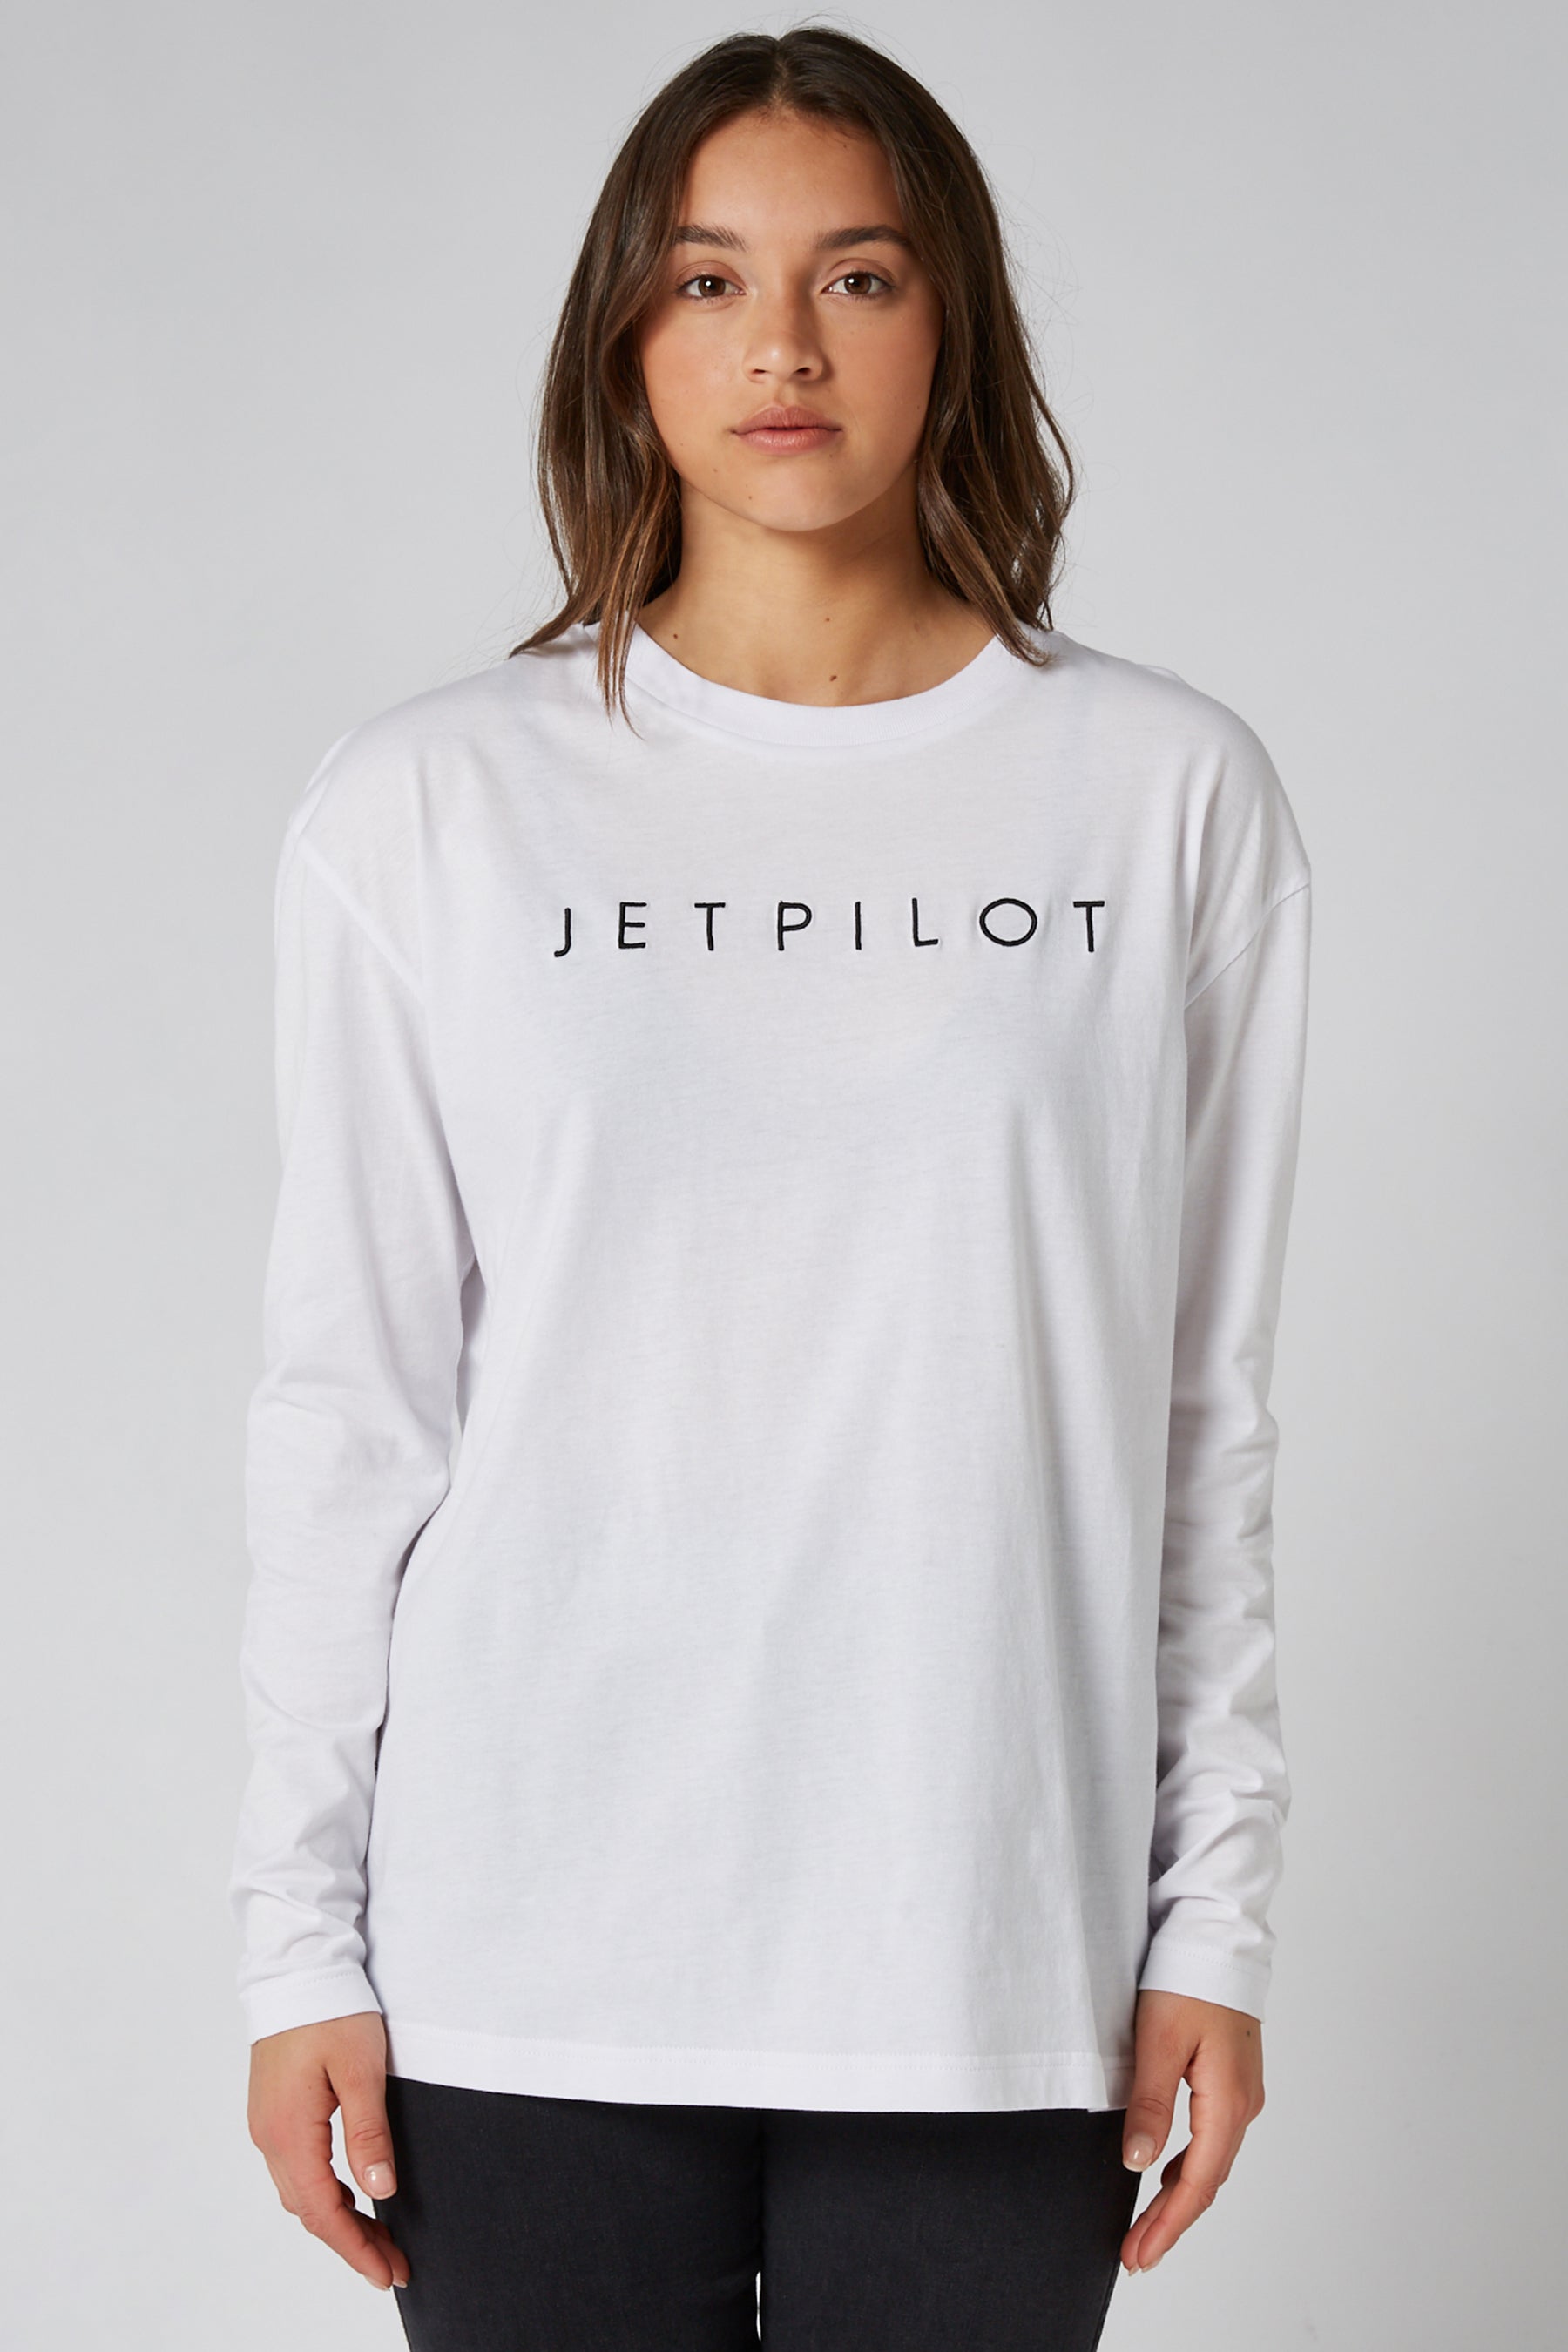 Jetpilot Simple Ladies Oversized L/S Tee - White